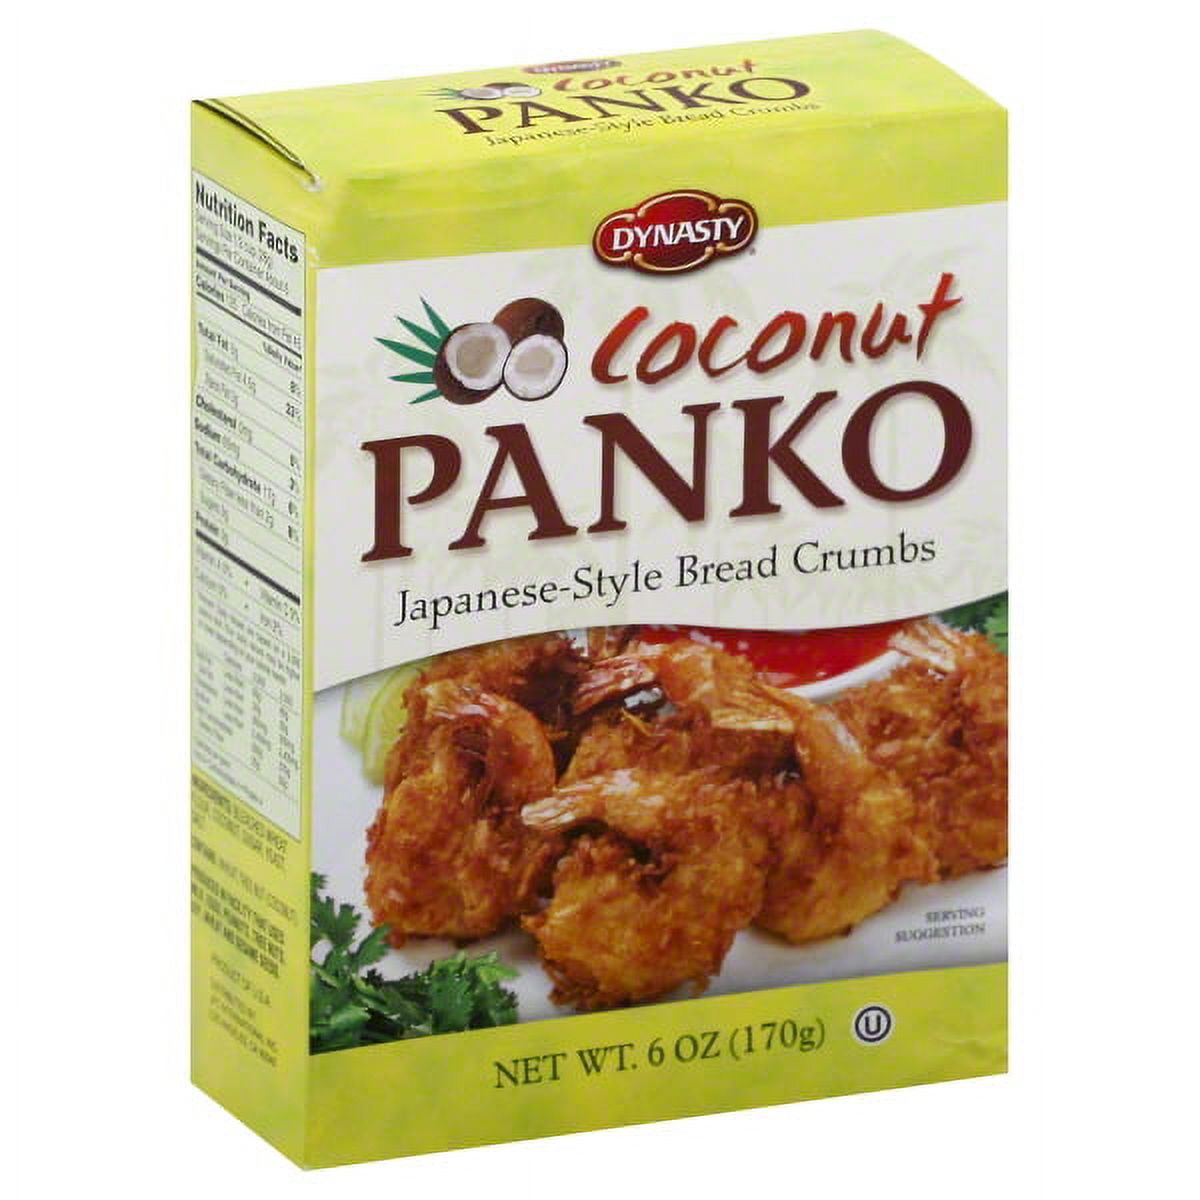 Dynasty Panko Japanese Style Bread Crumbs, 8 oz